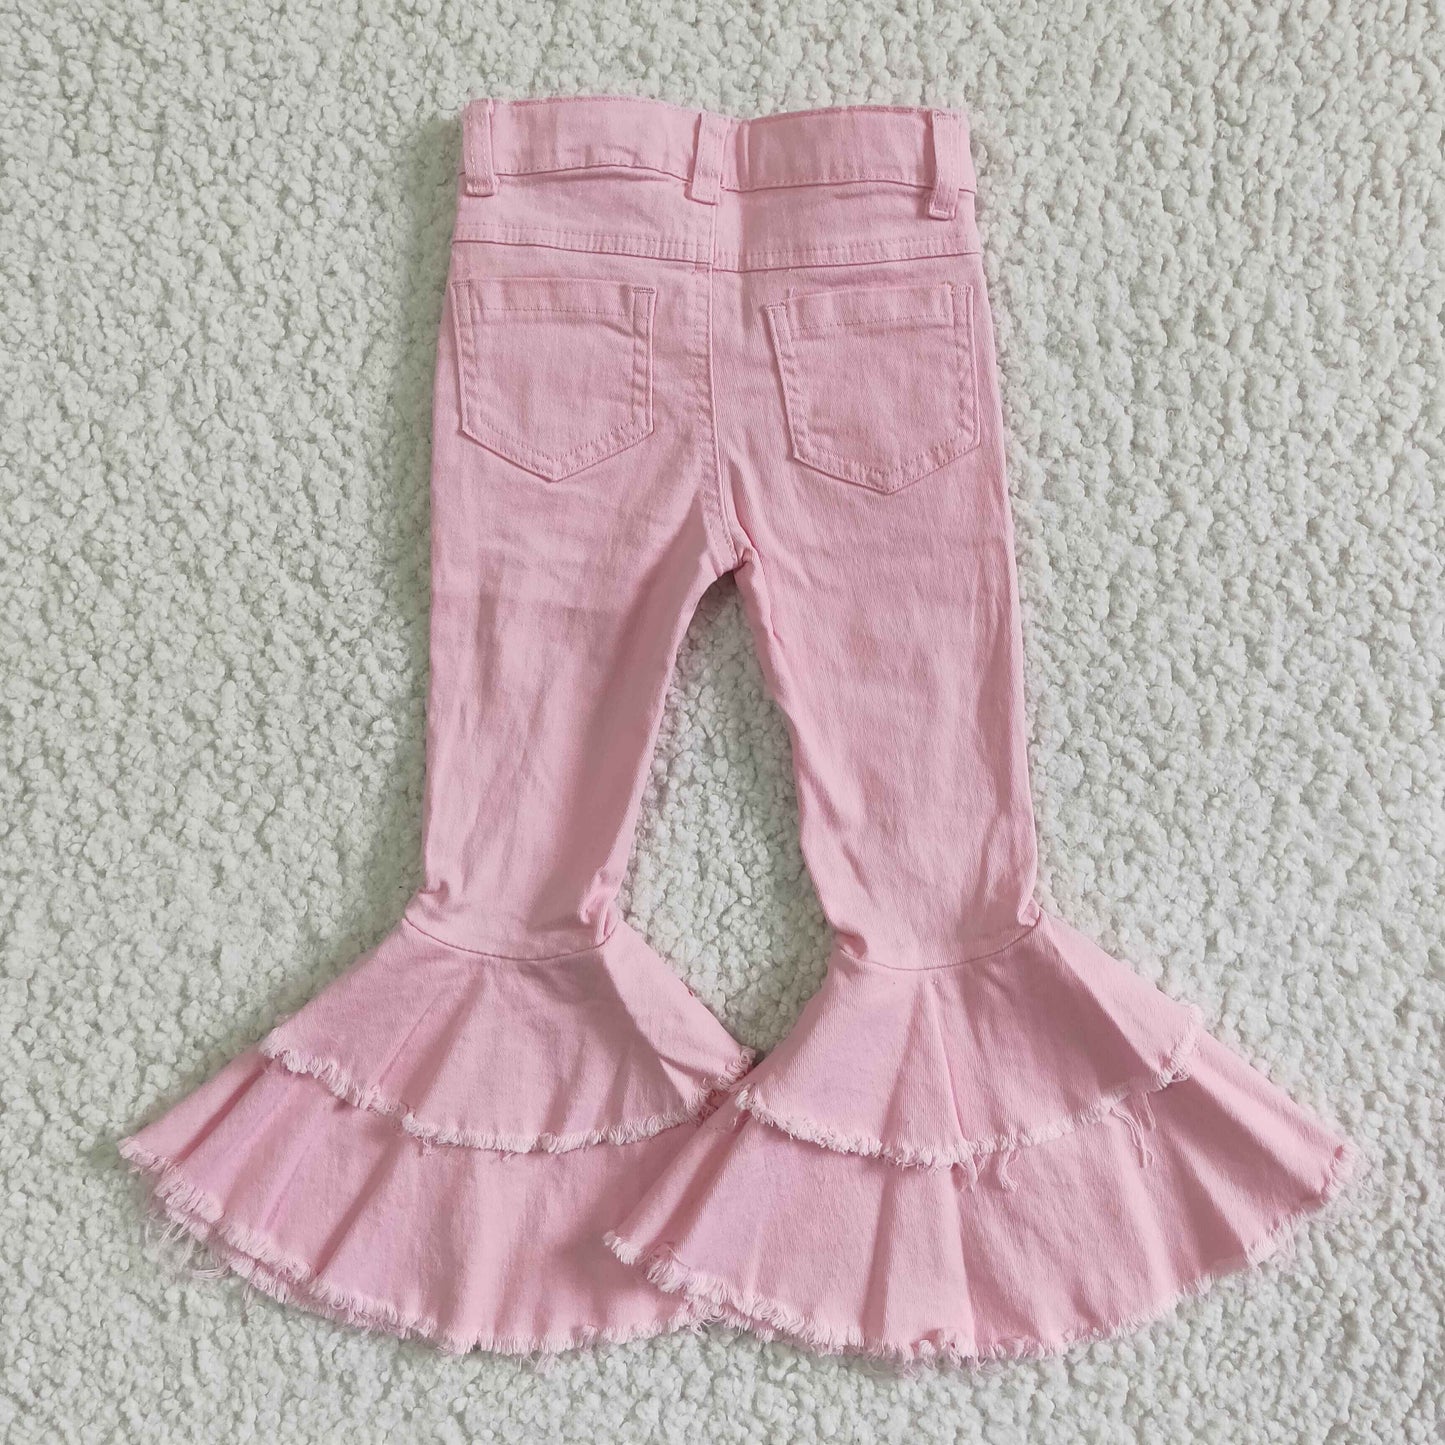 Light pink distressed double ruffle denim pants